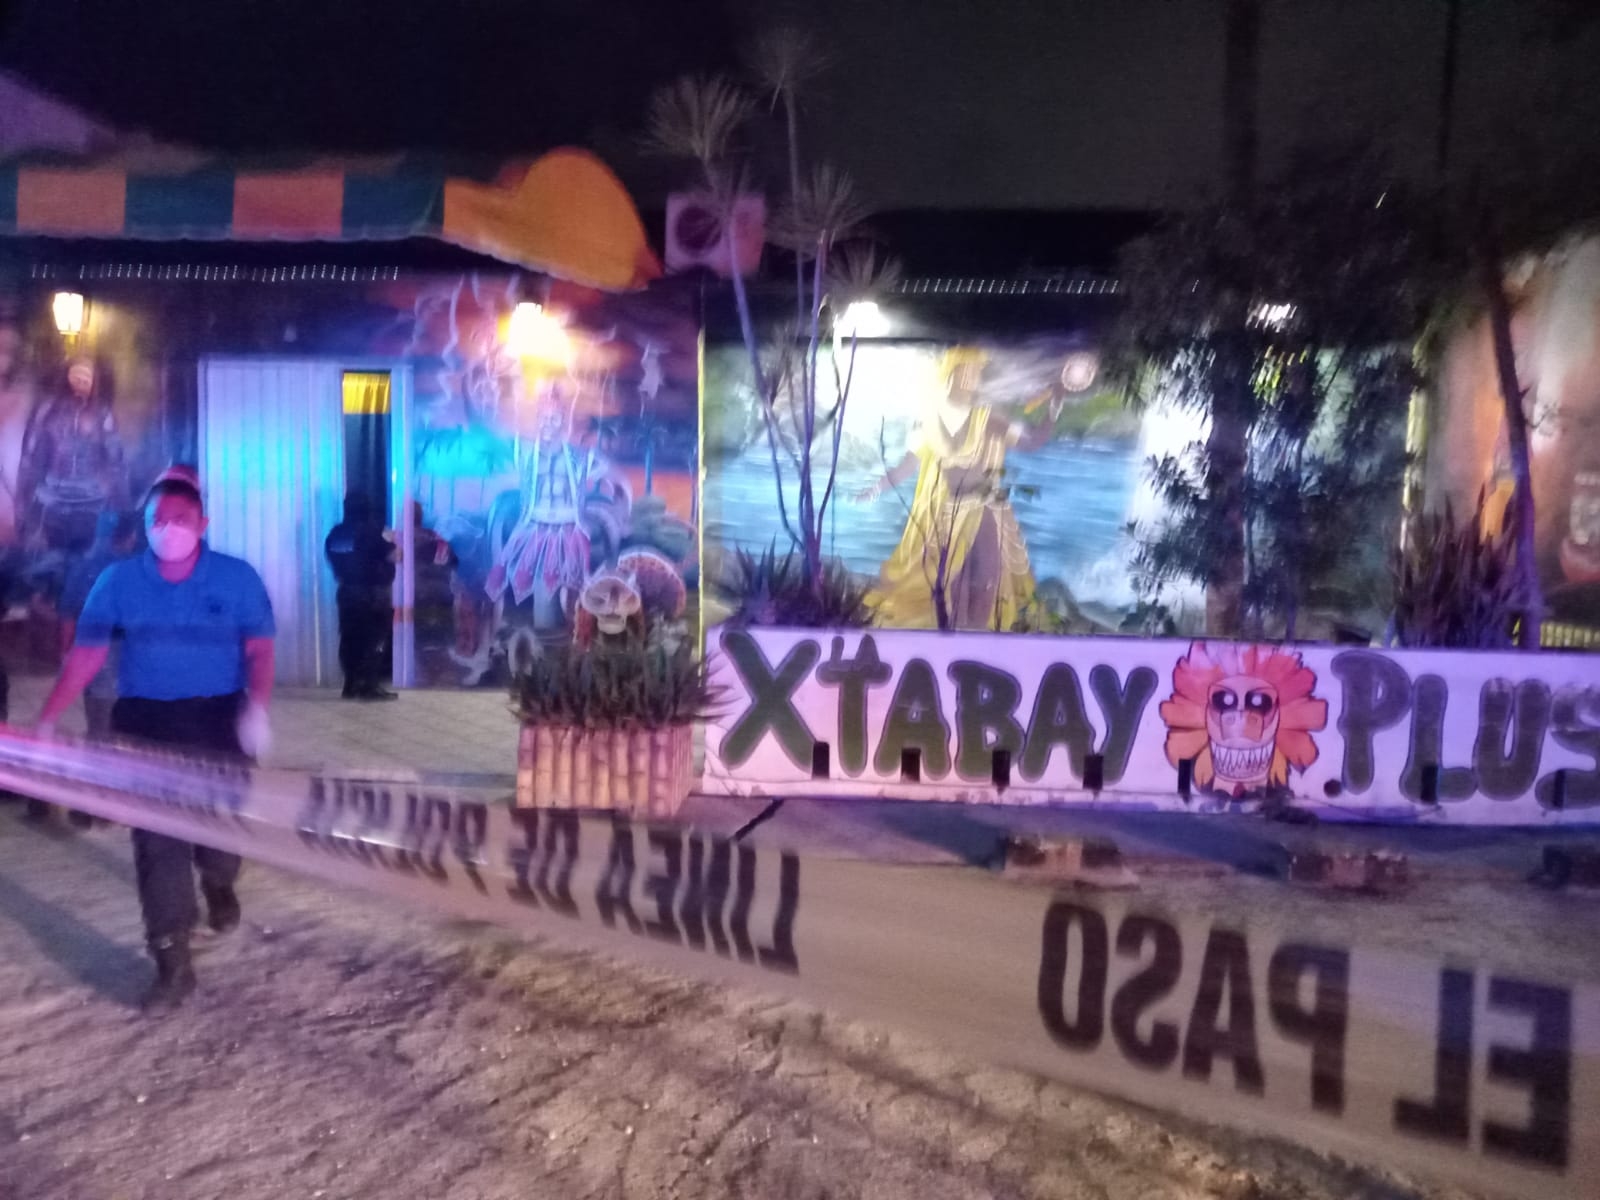 Asesinan a balazos a vendedor de flores al interior del bar La Xtabay de Cancún